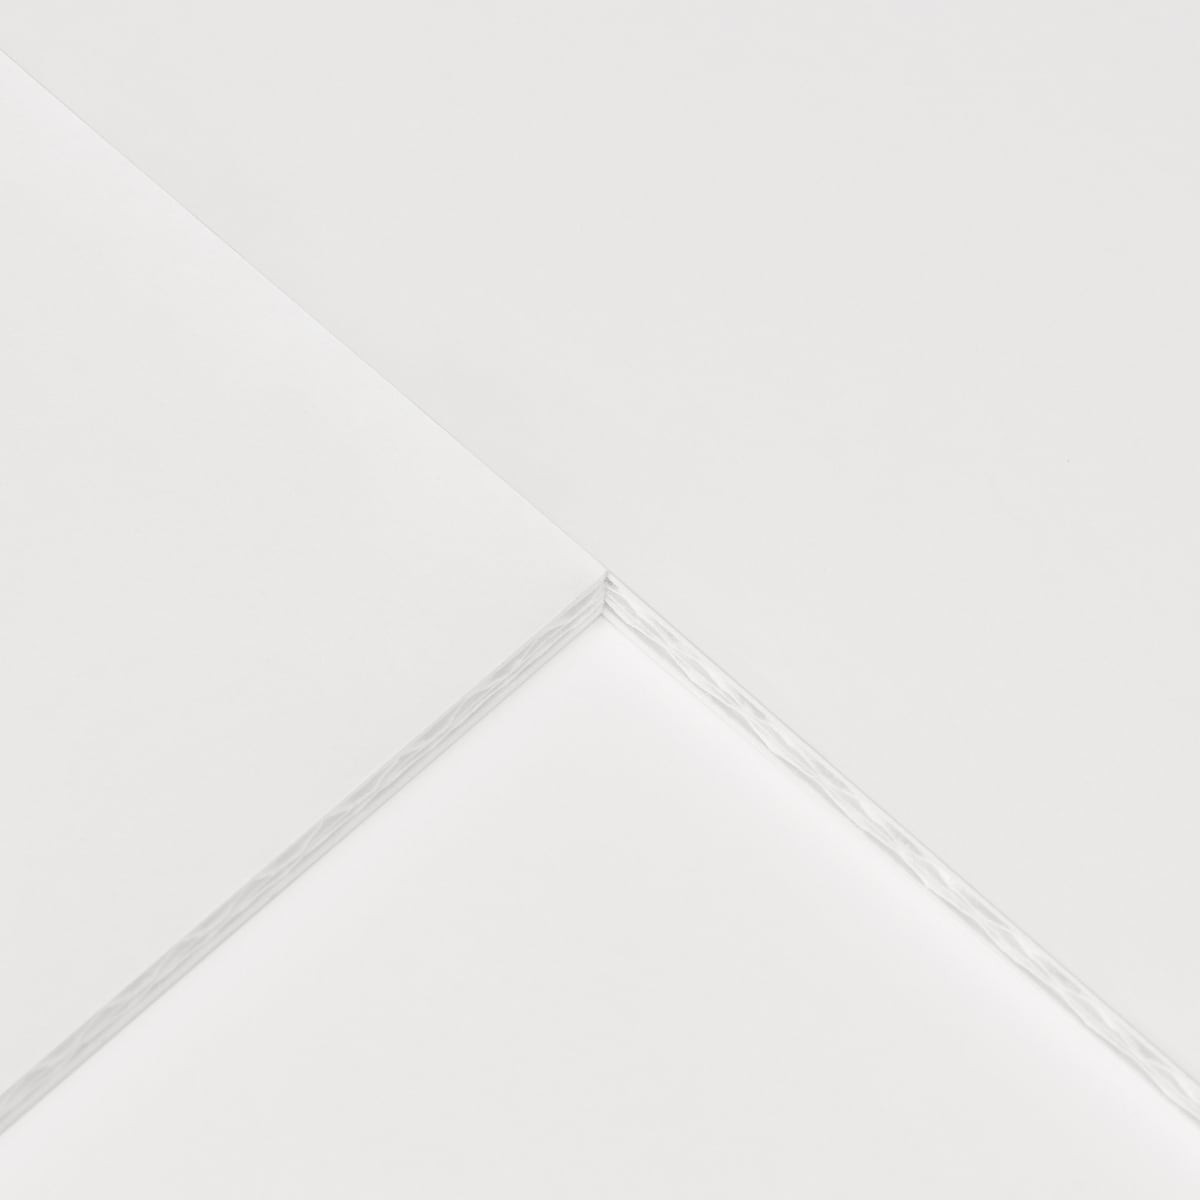 DISPA display boards in white